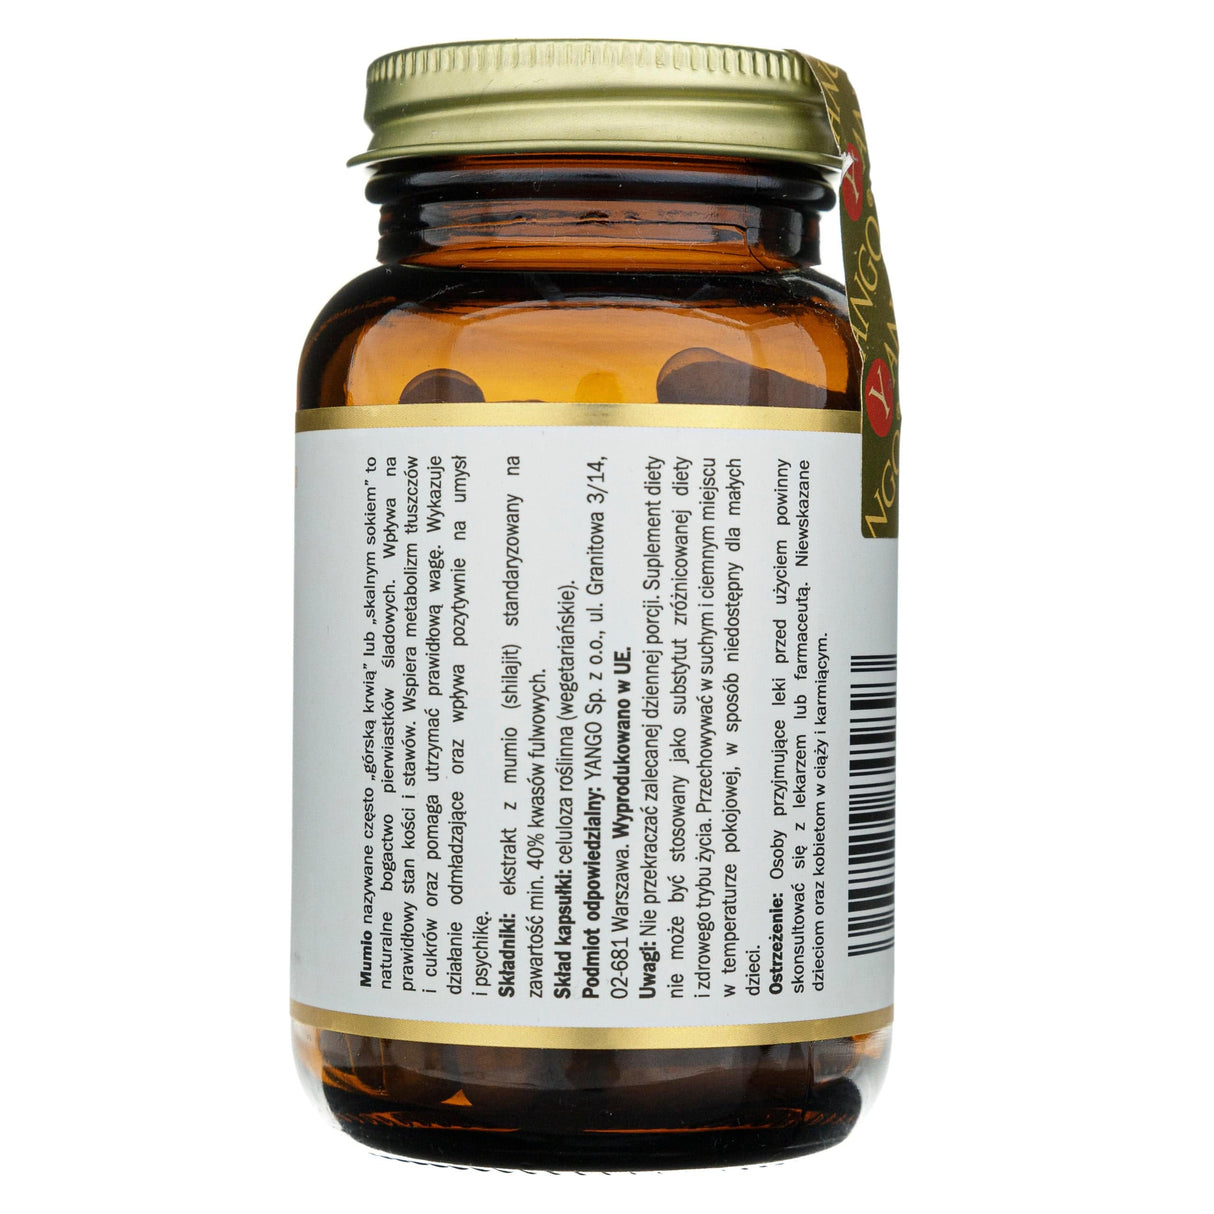 Yango Mumio 40% Fulvic Acids - 90 Capsules